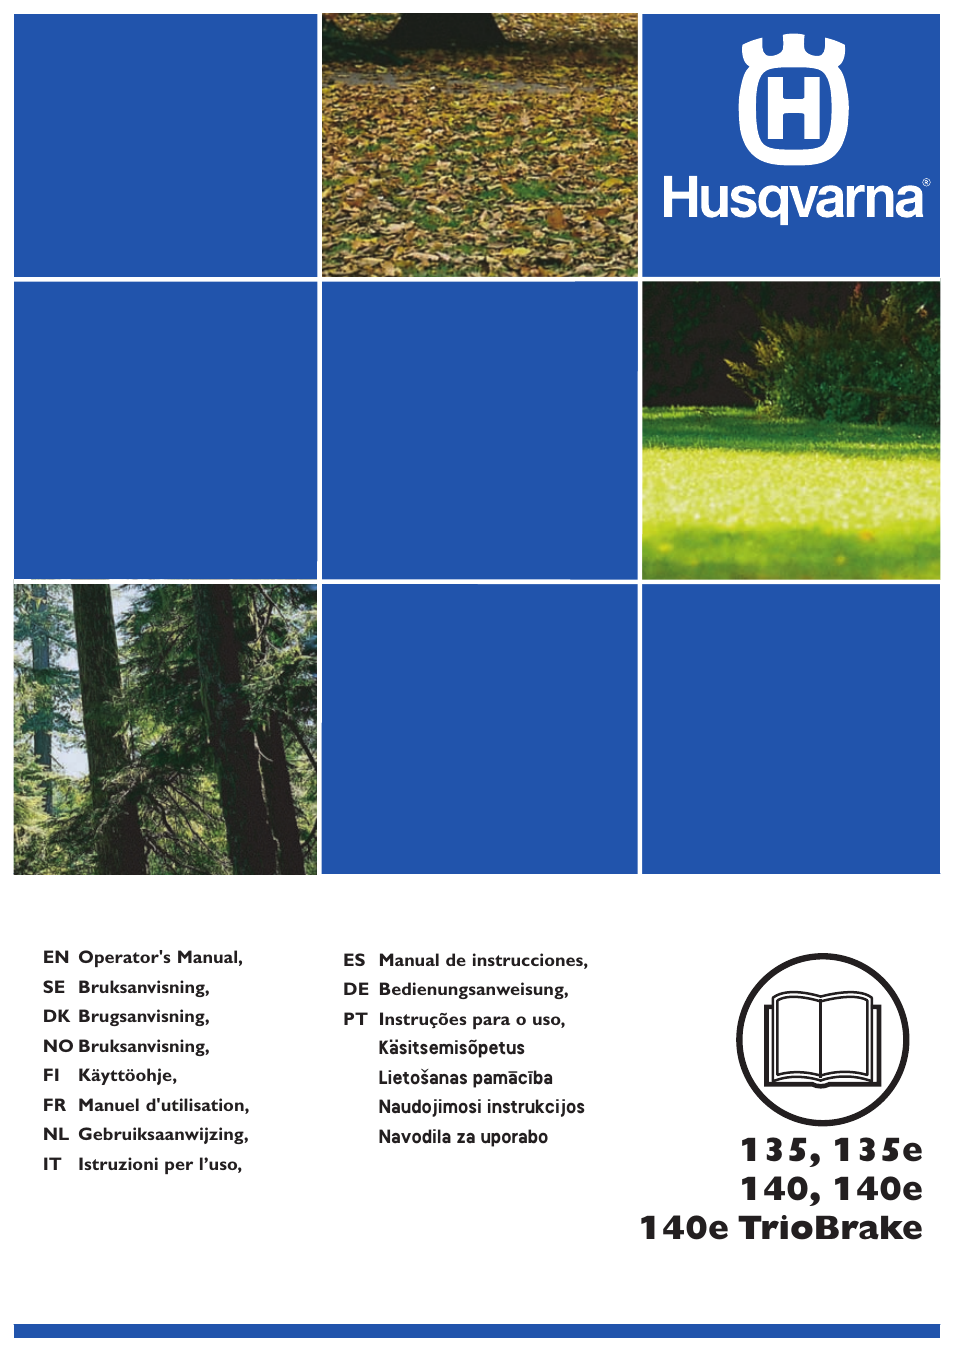 Husqvarna 140 User Manual | 420 pages